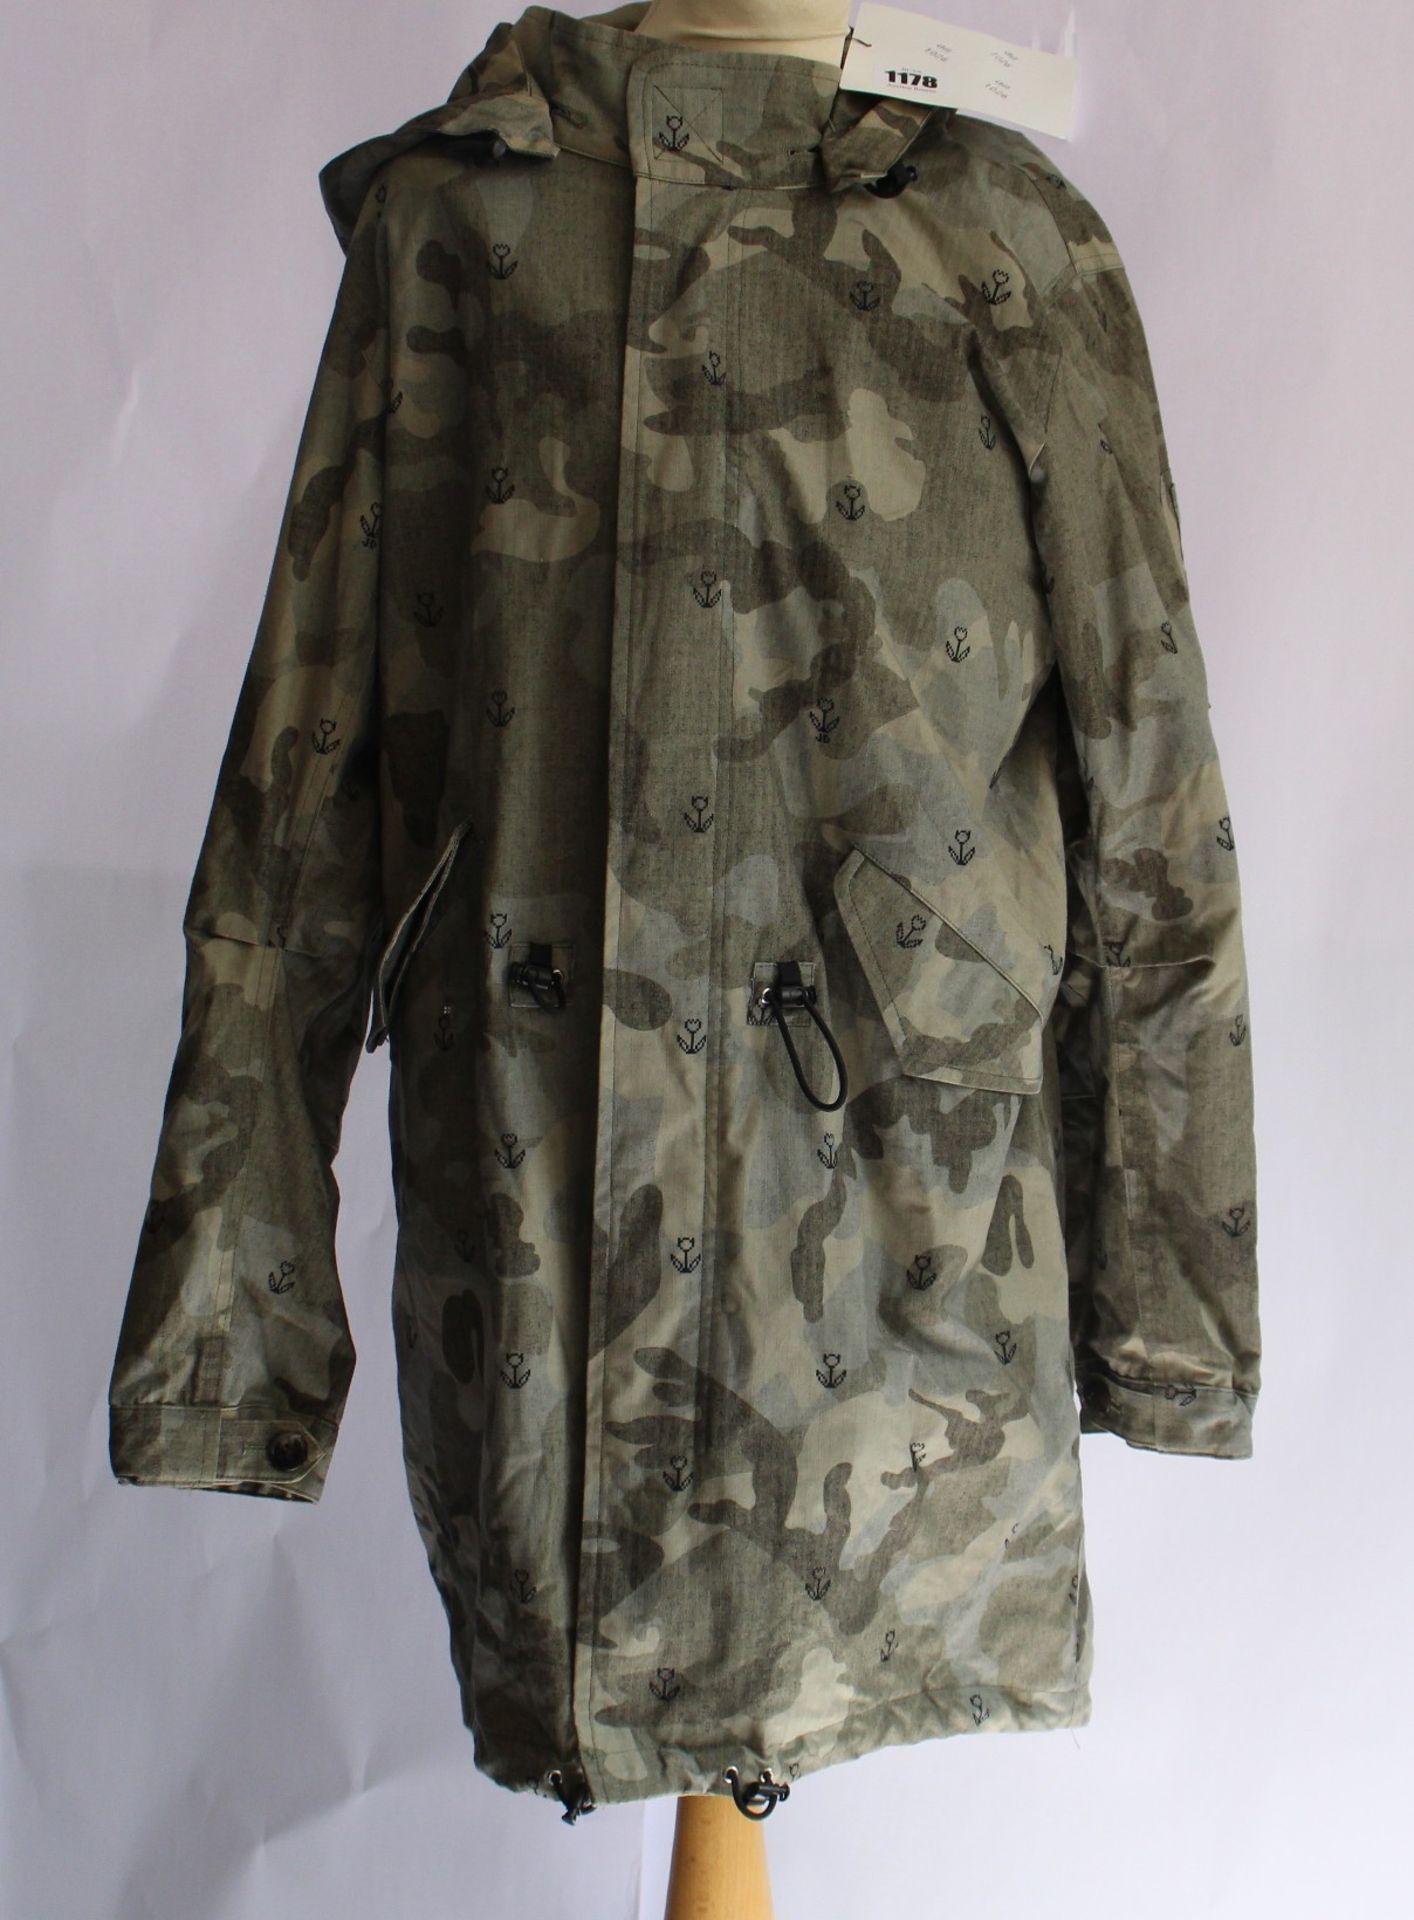 A pre-owned Julian David grey camo jacket (M - Excellent condition).